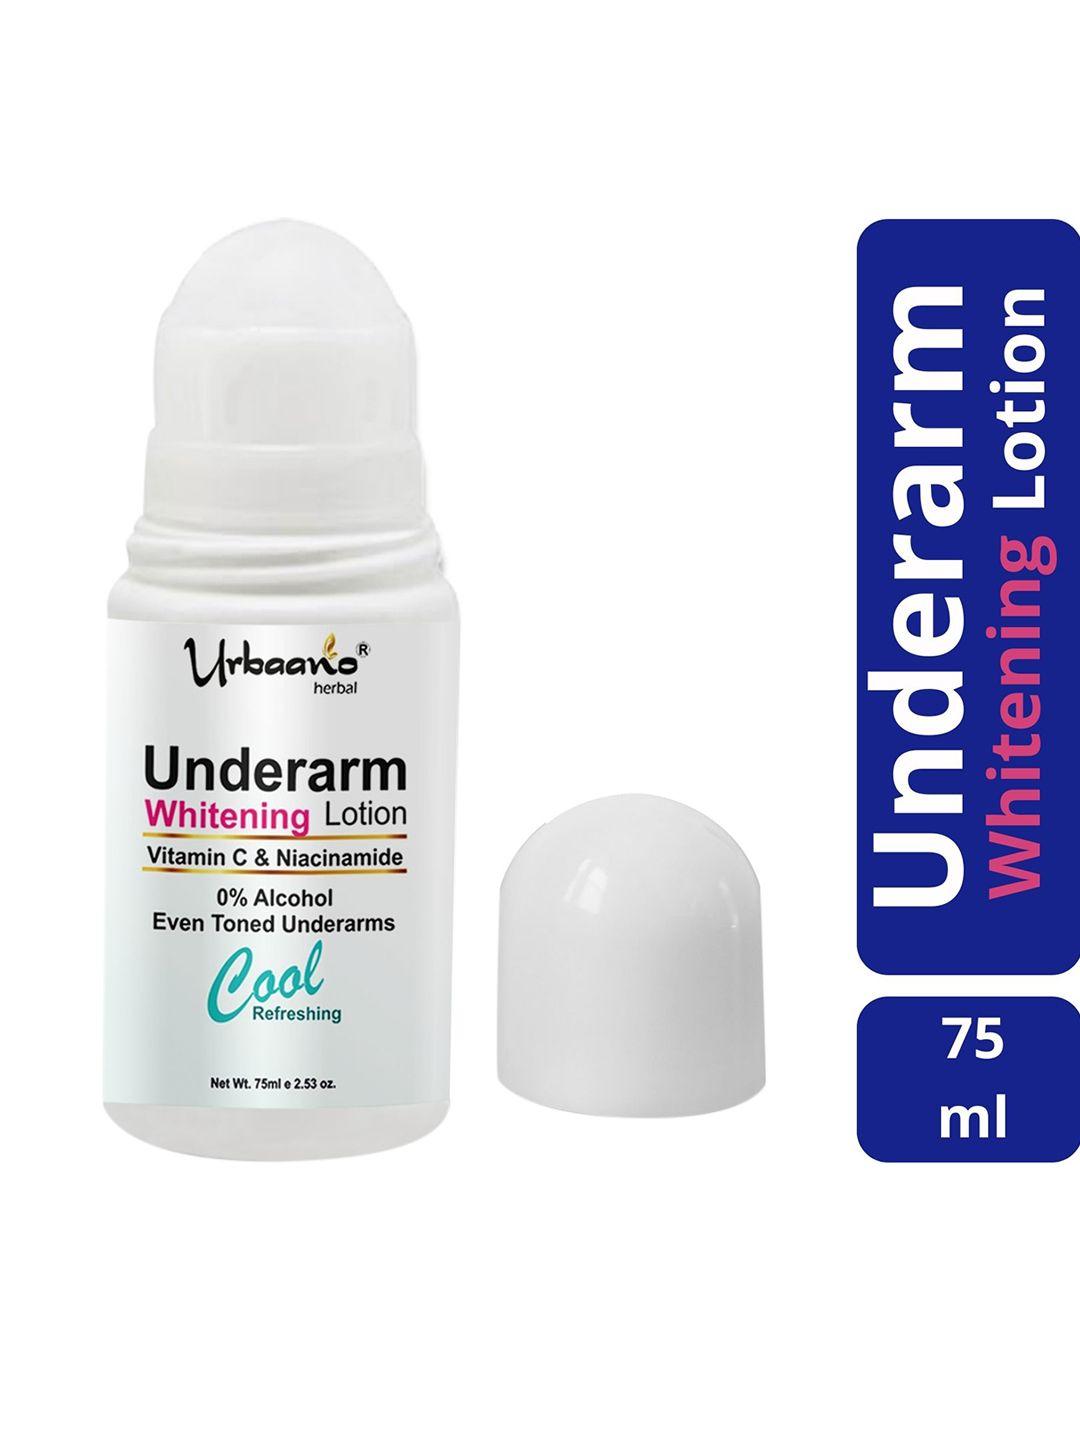 urbaano herbal cool refreshing underarm whitening lotion - 75ml